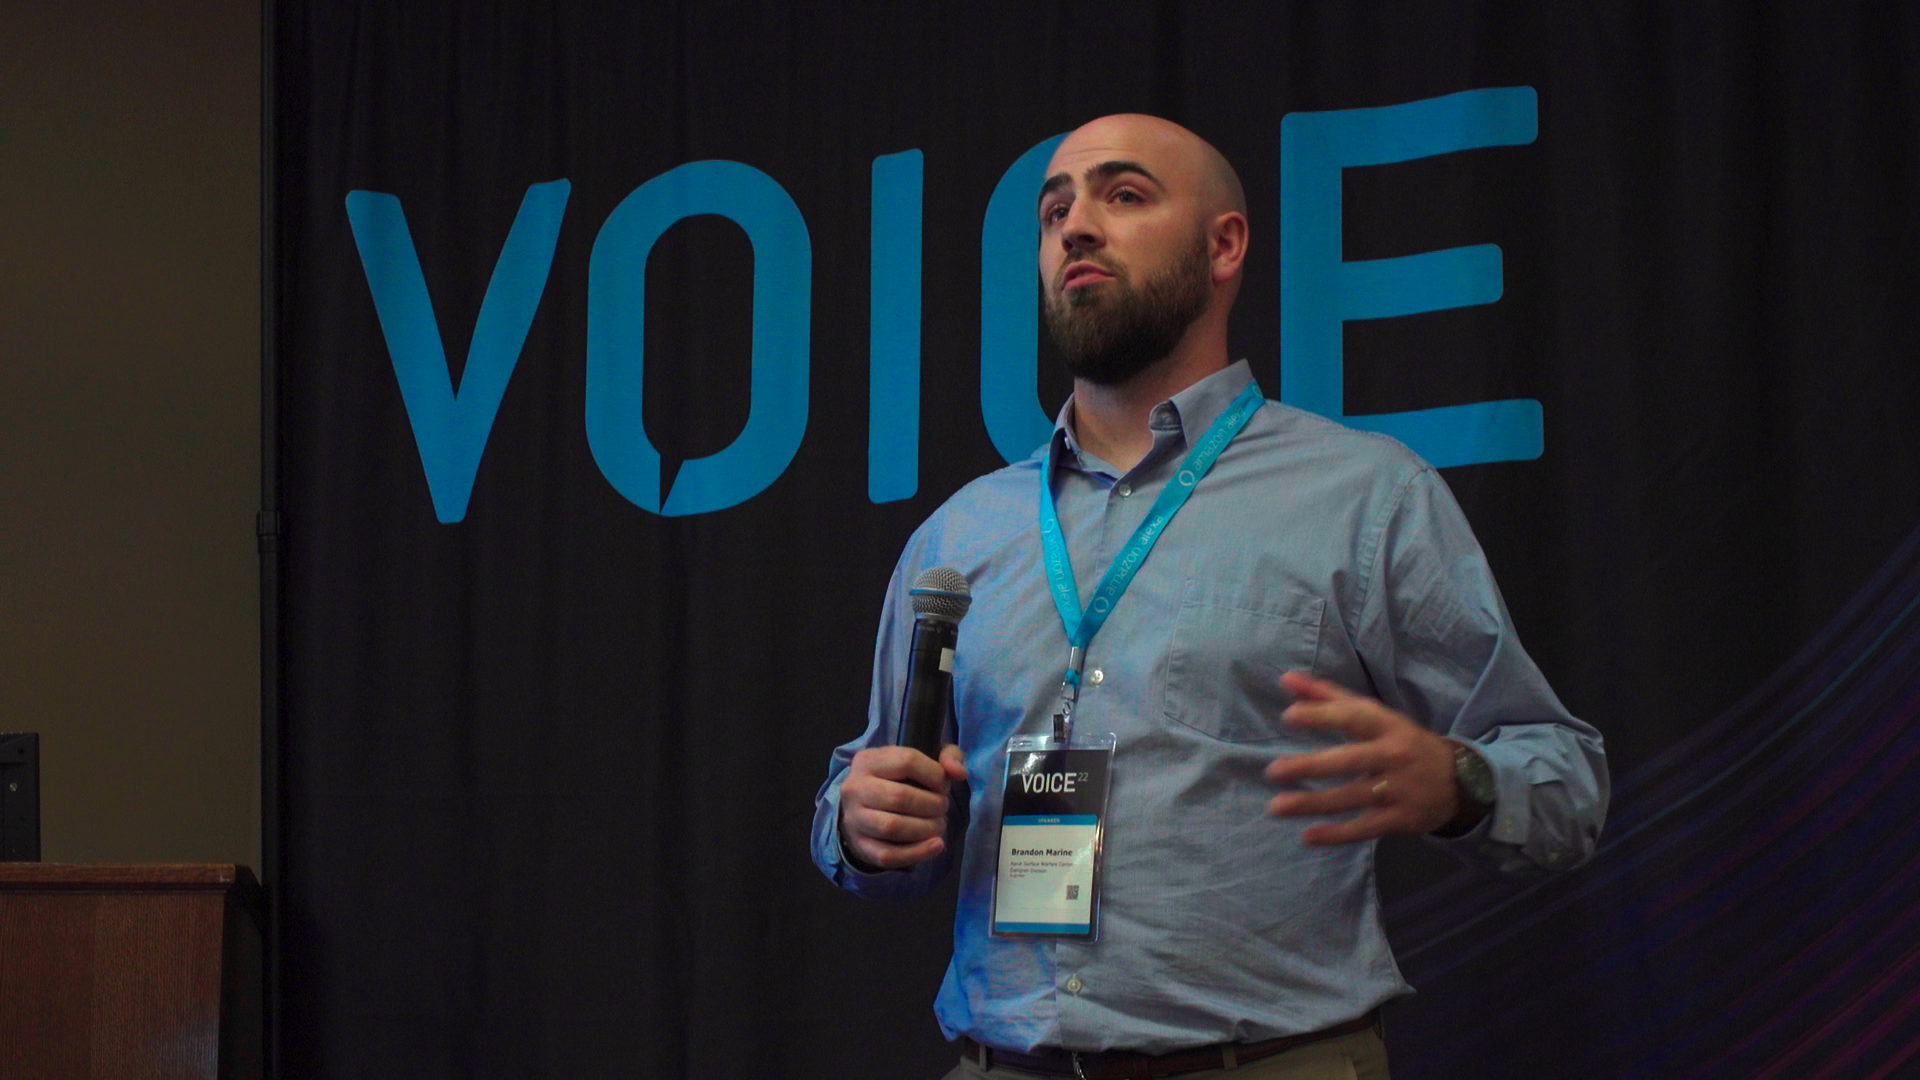 VOICE22 | Augmented Navy Voice Communication | Brandon Marine